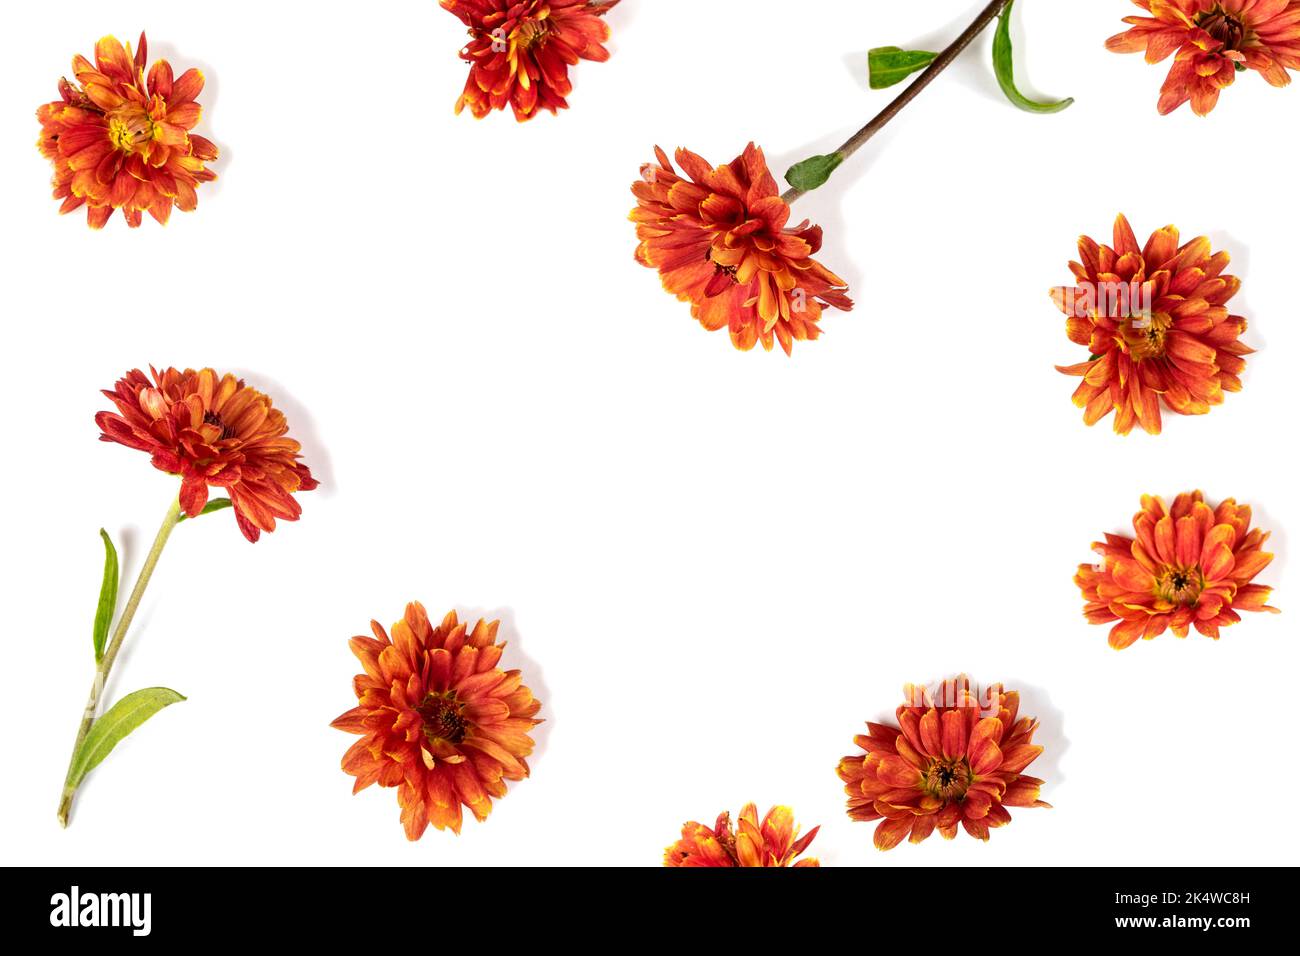 Orange chrysanthemum flowers on a white background Stock Photo